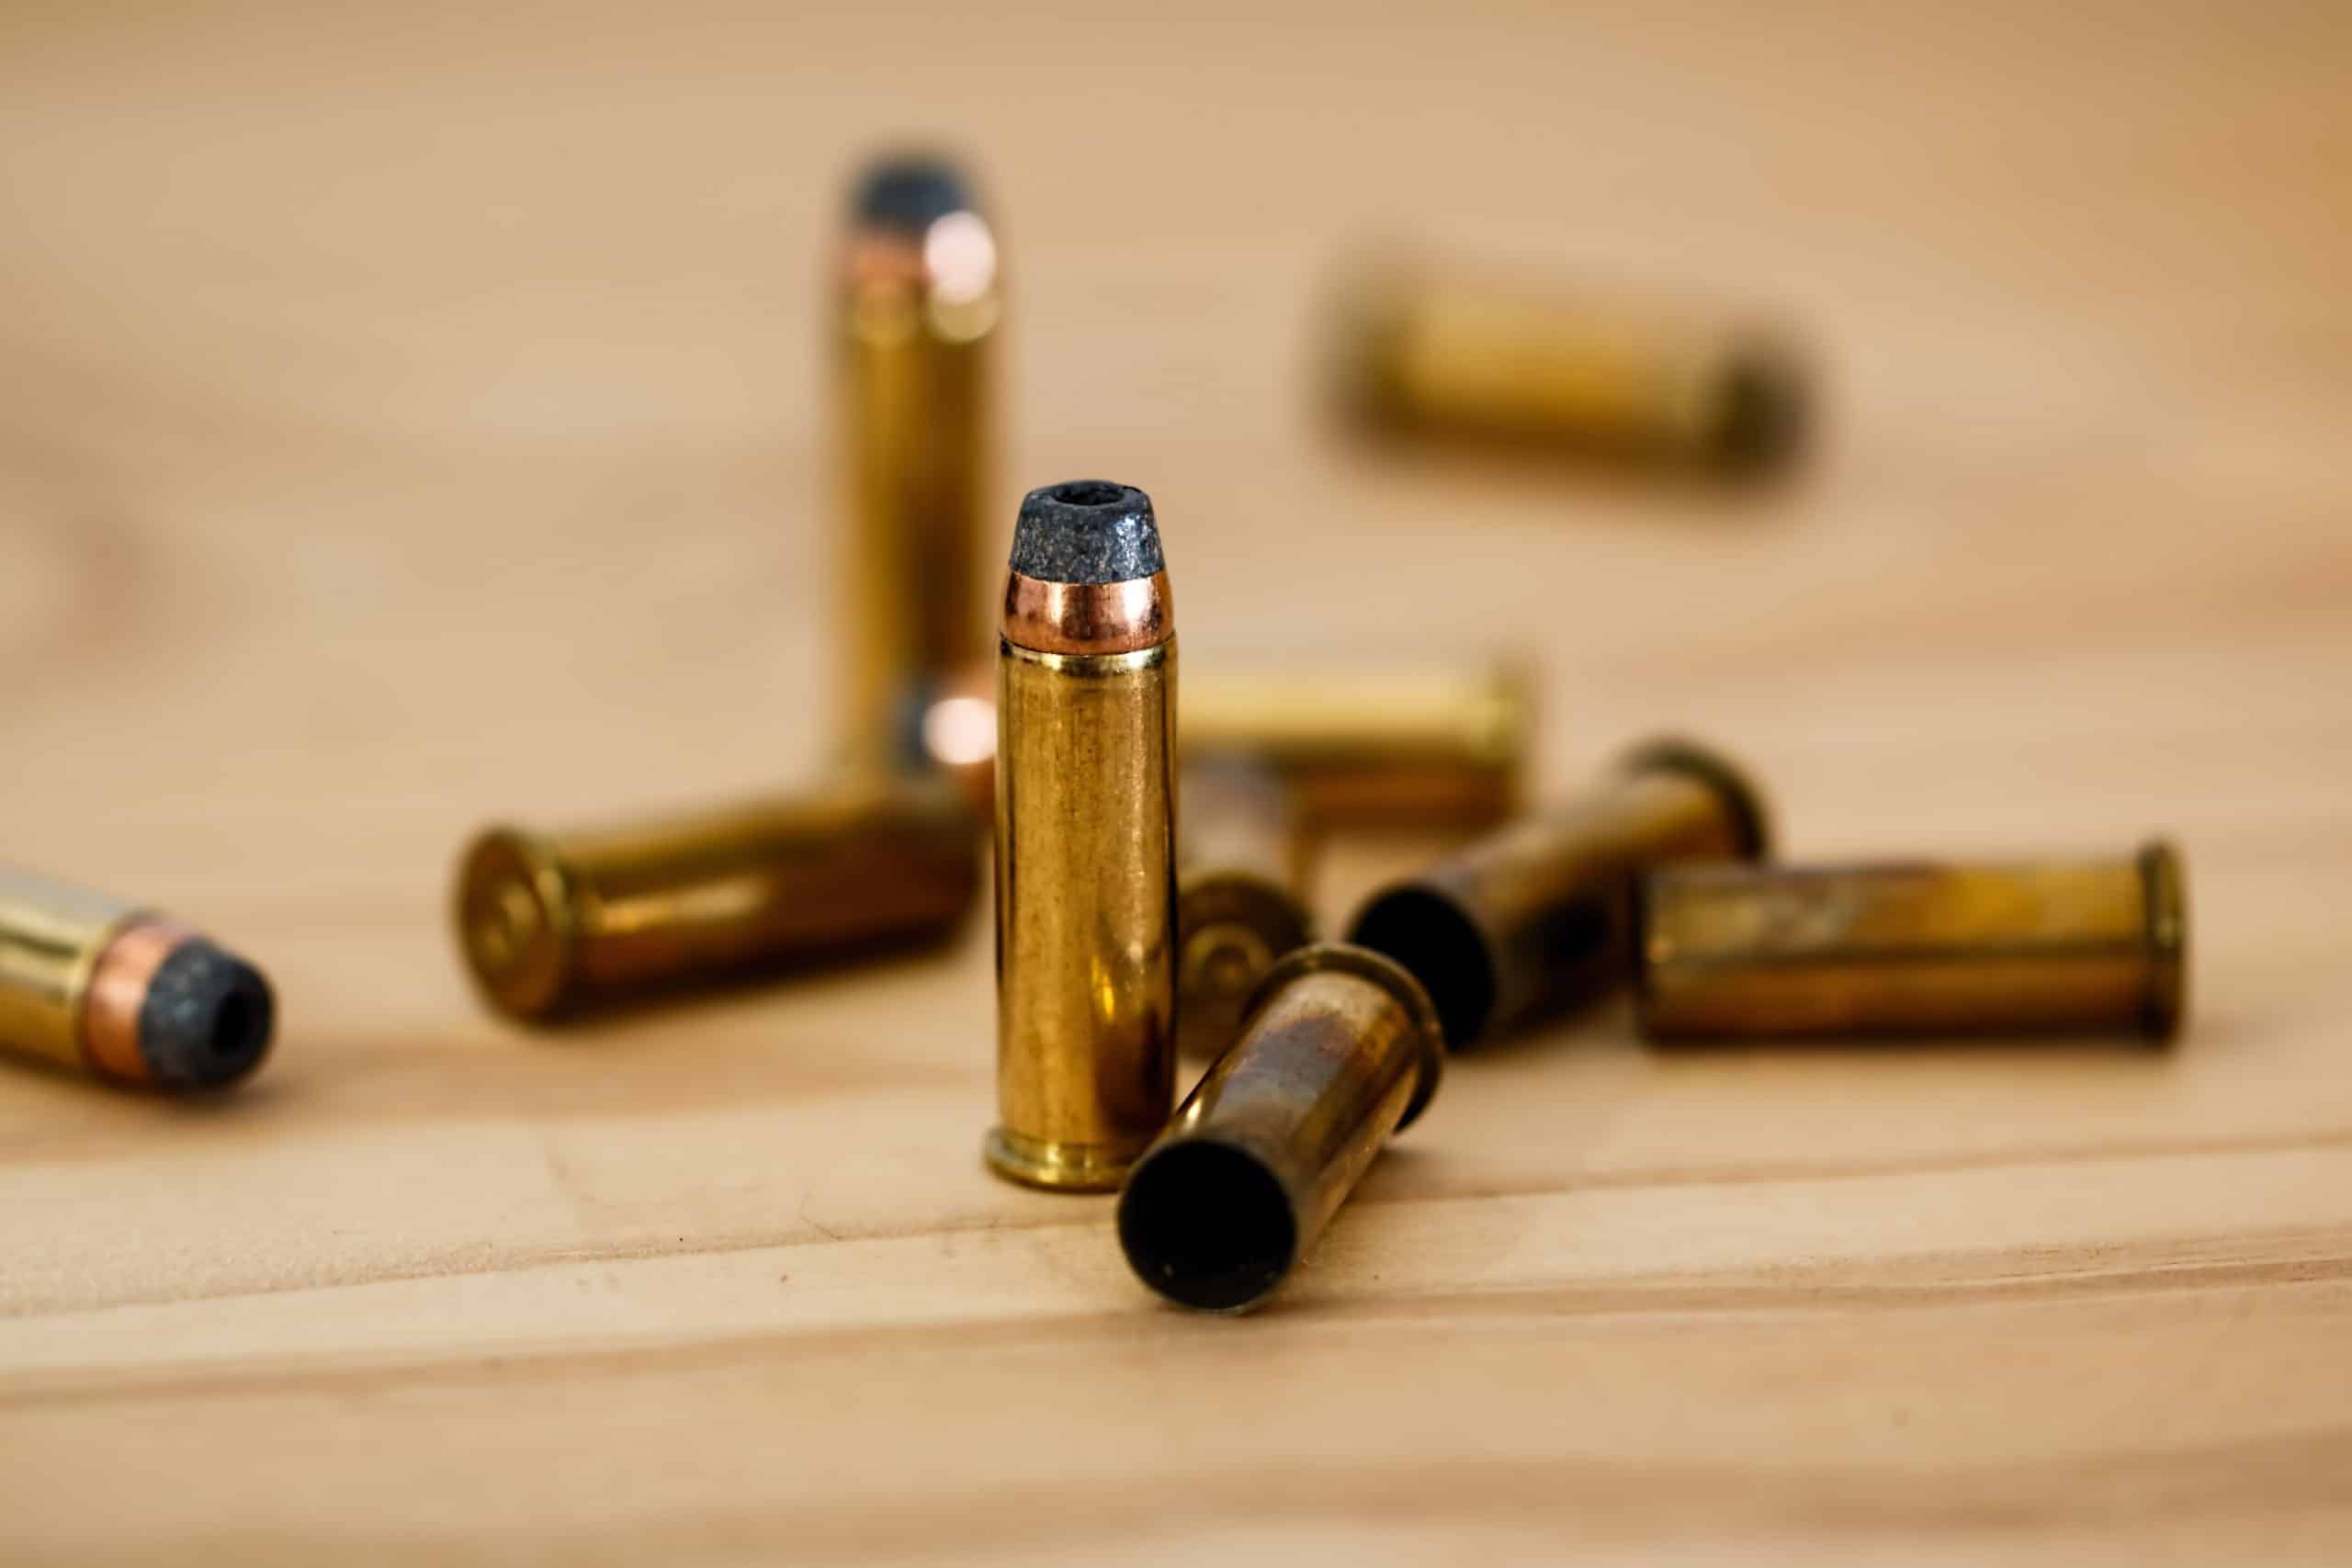 Background Checks Lead to Gun Confiscation in California